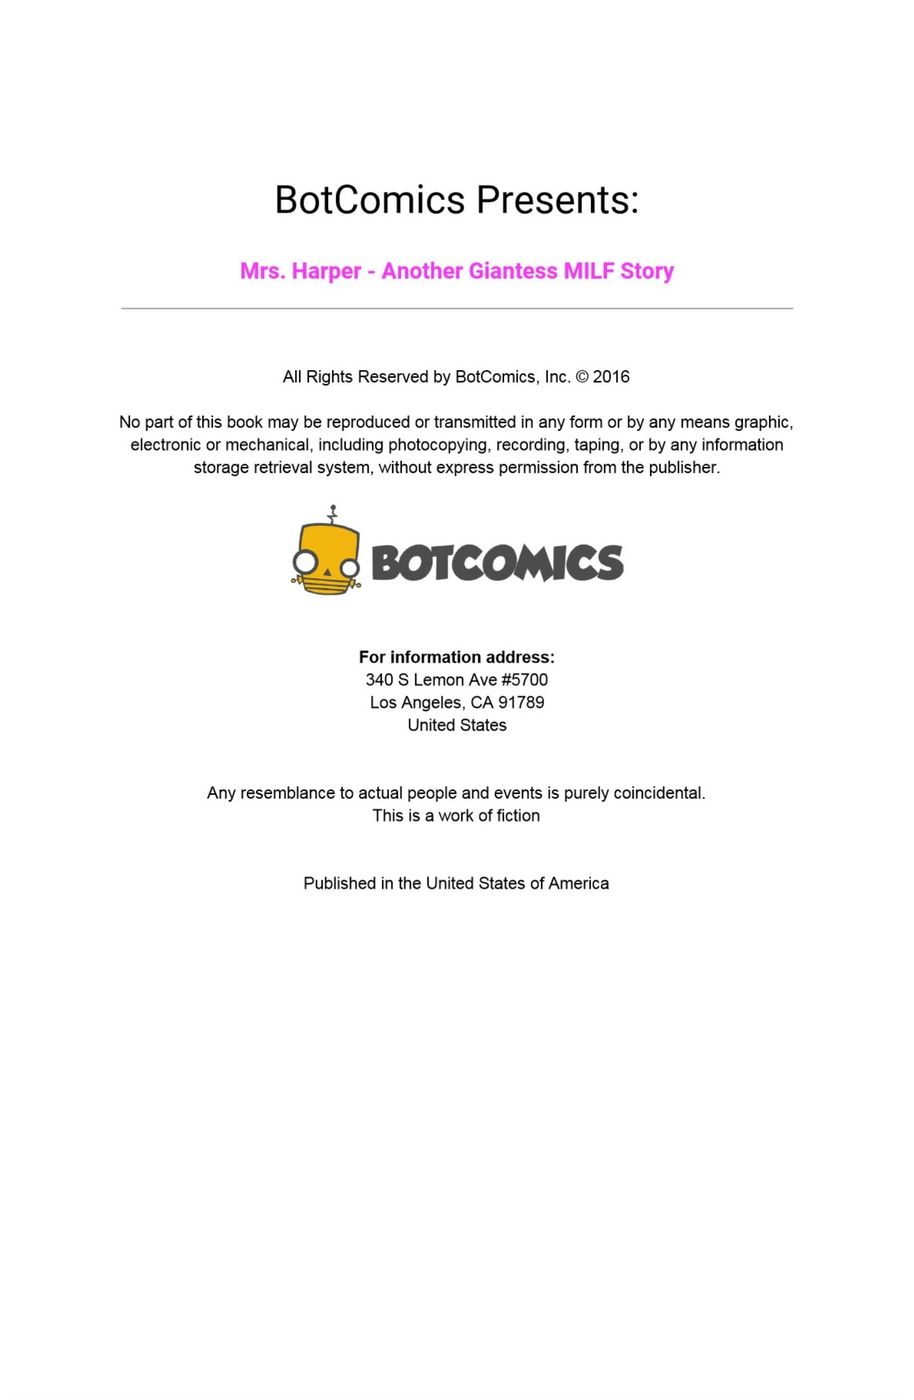 Mrs. Harper Issue 2 BotComics page 2